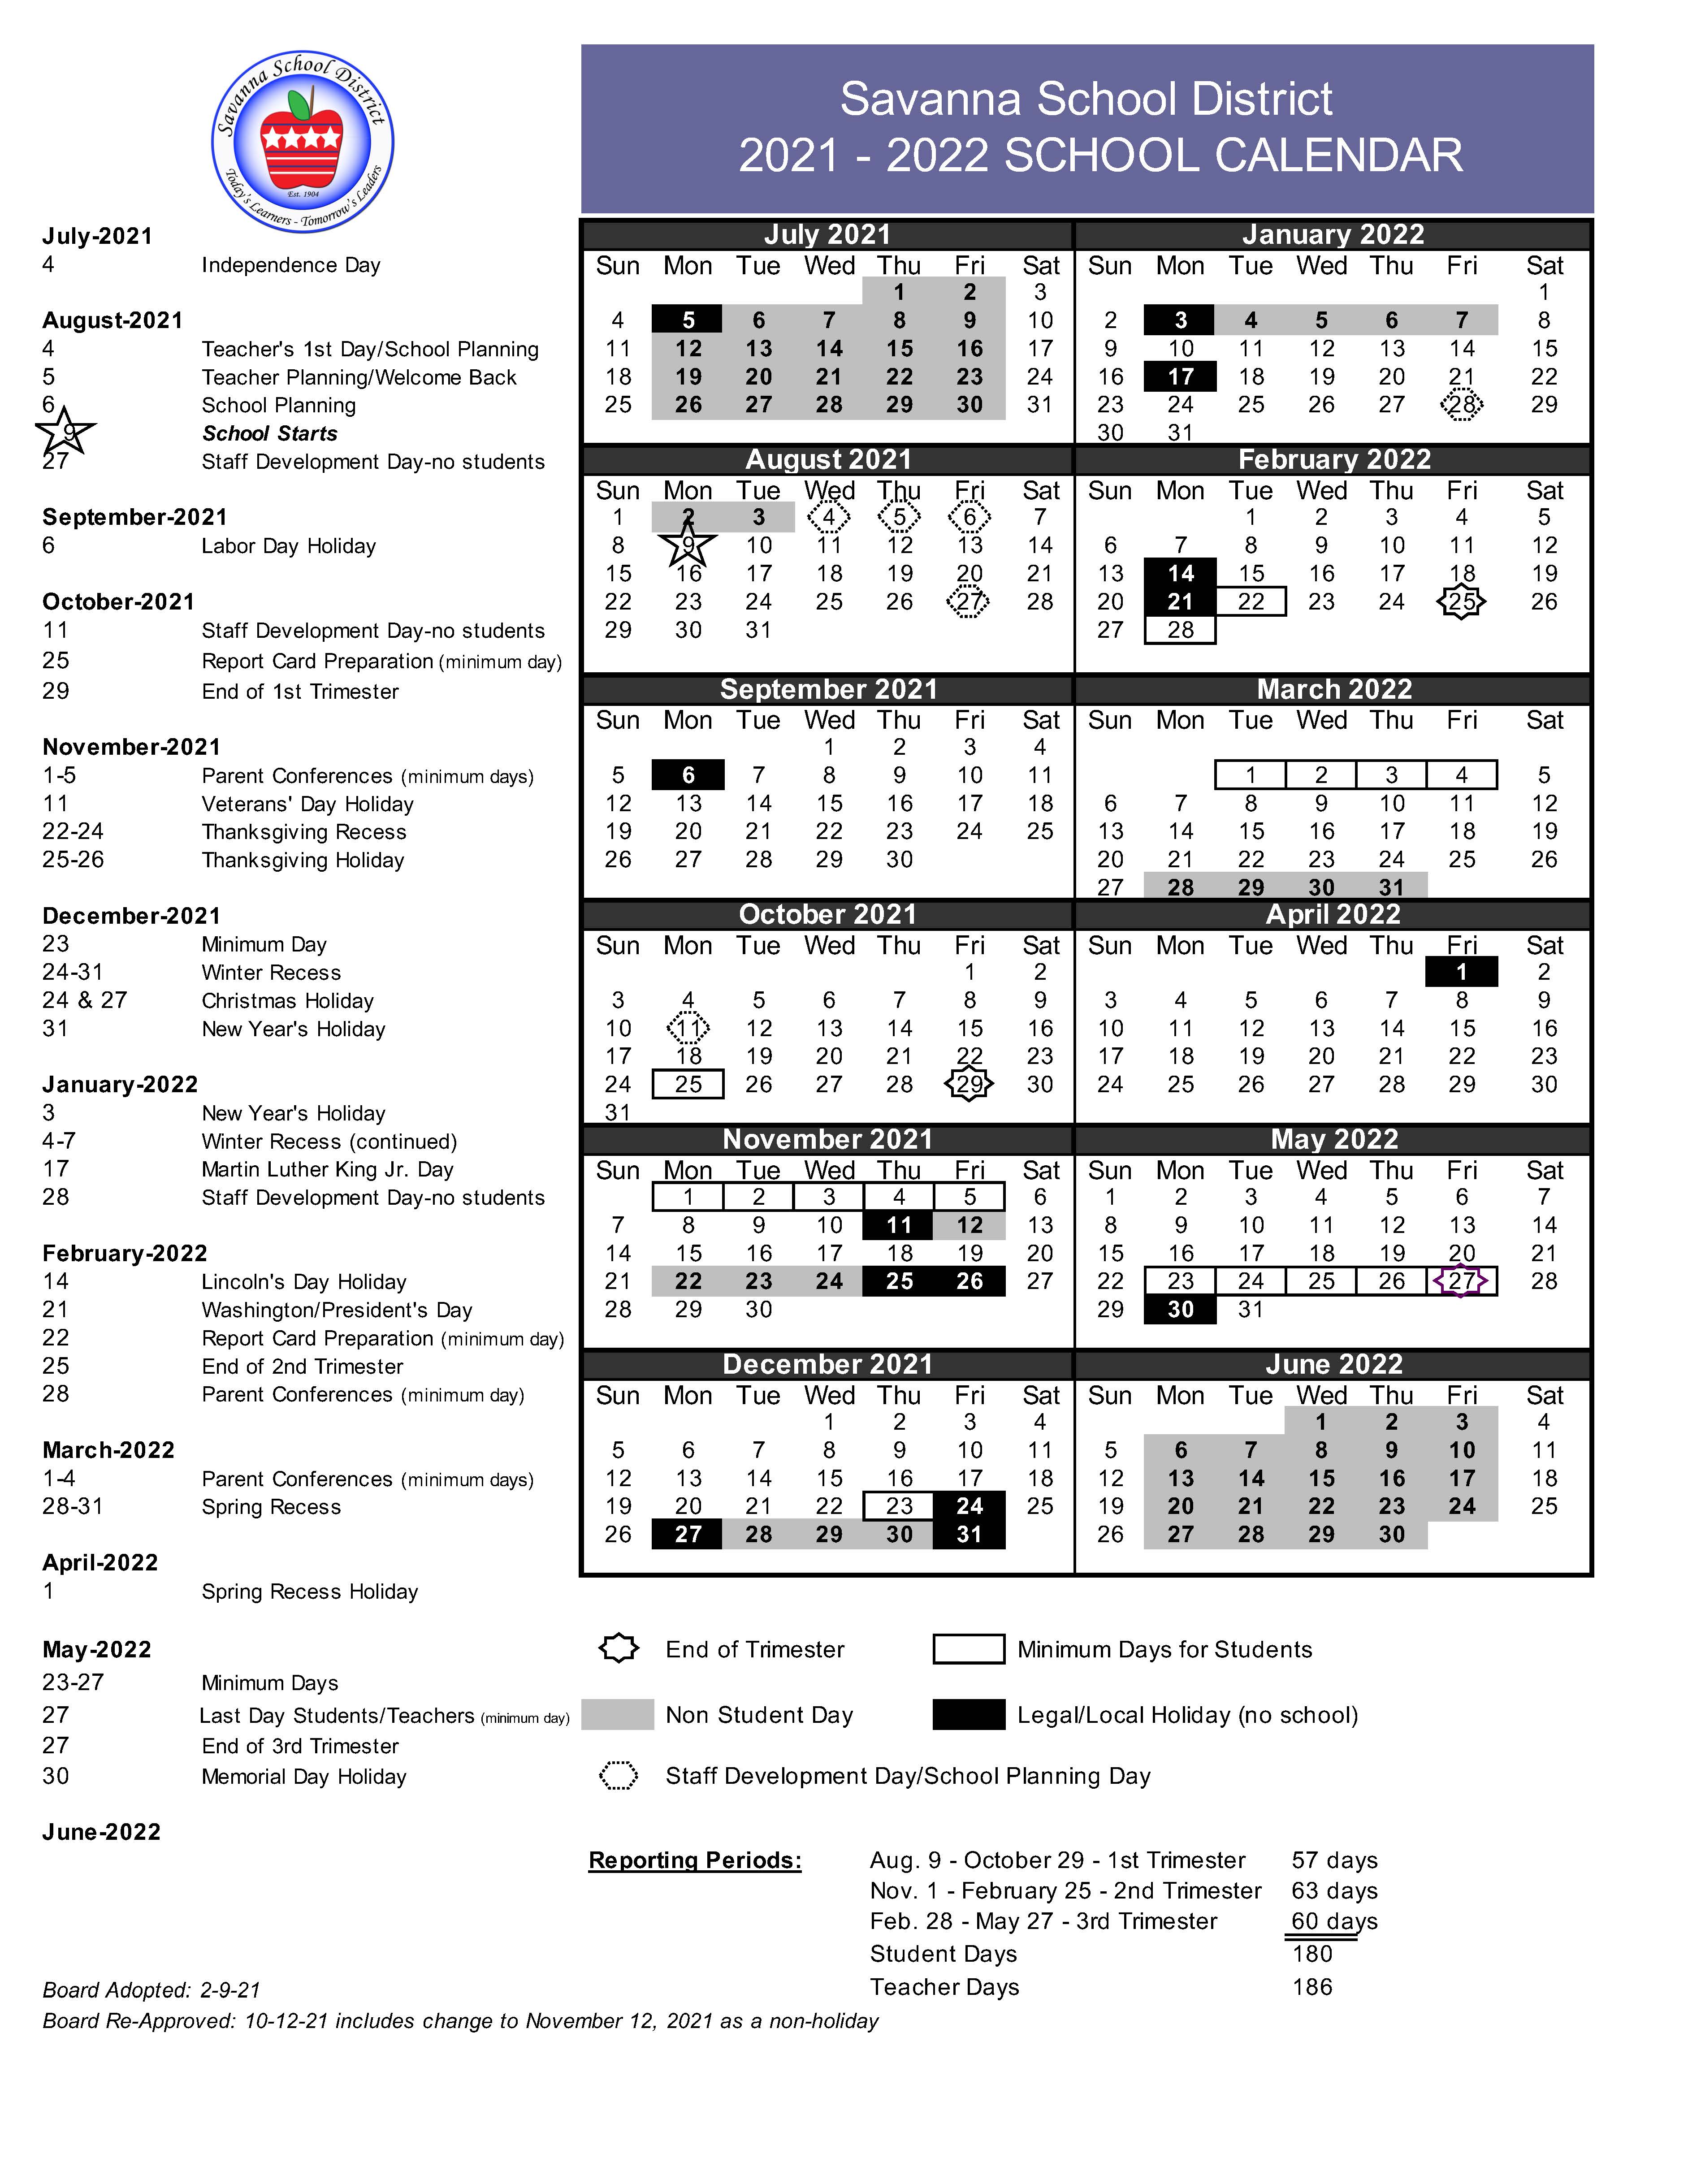 savanna-school-district-academic-calendar